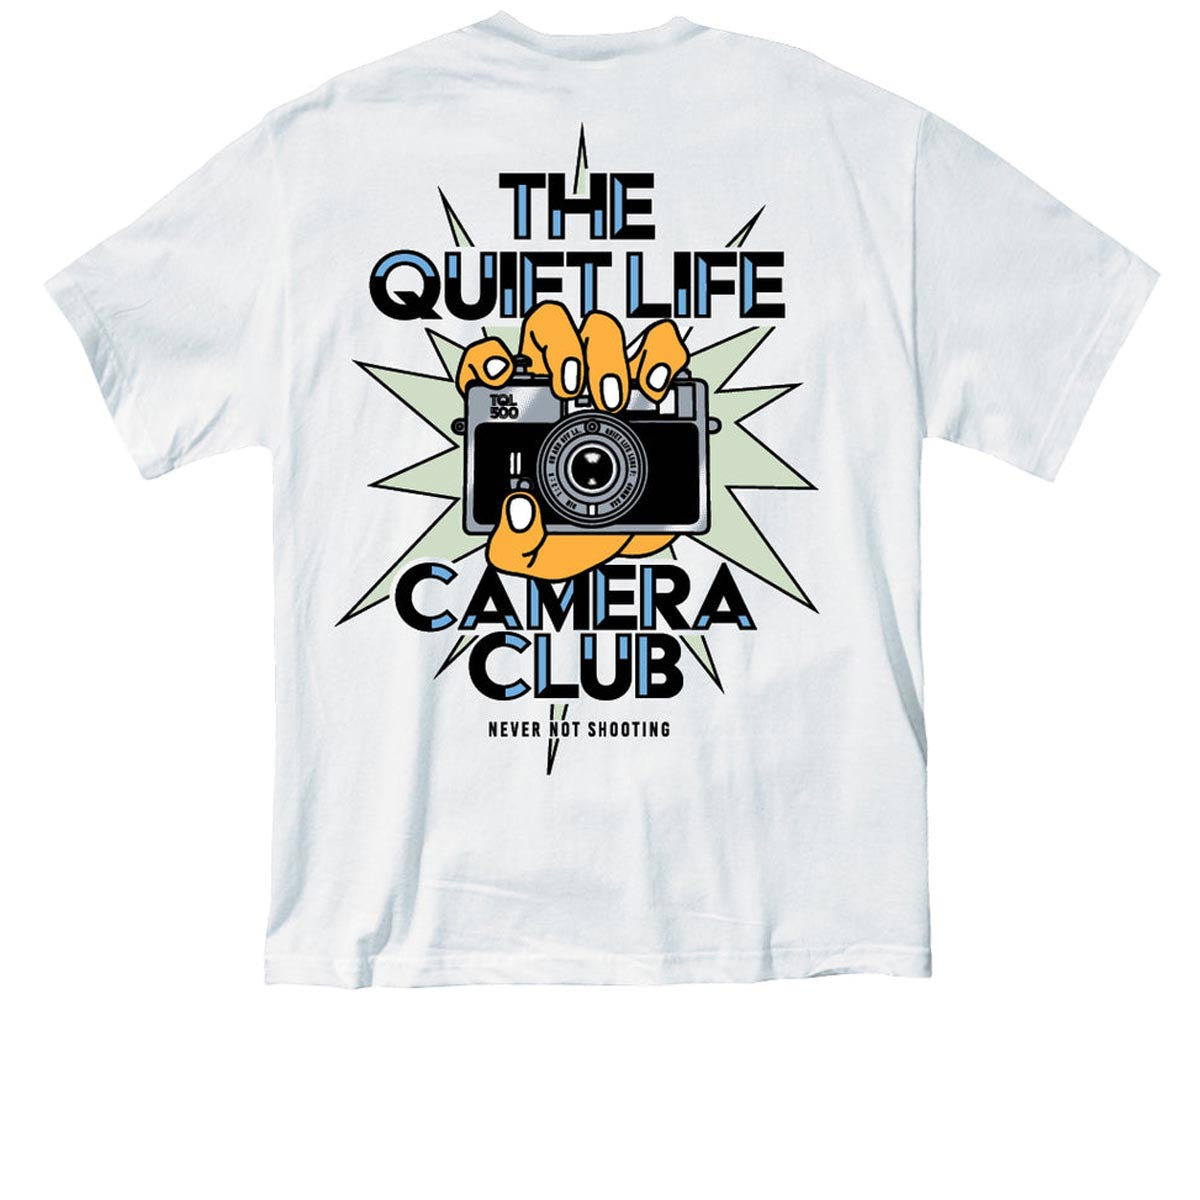 The Quiet Life Camera Club Burst T-Shirt - White image 1